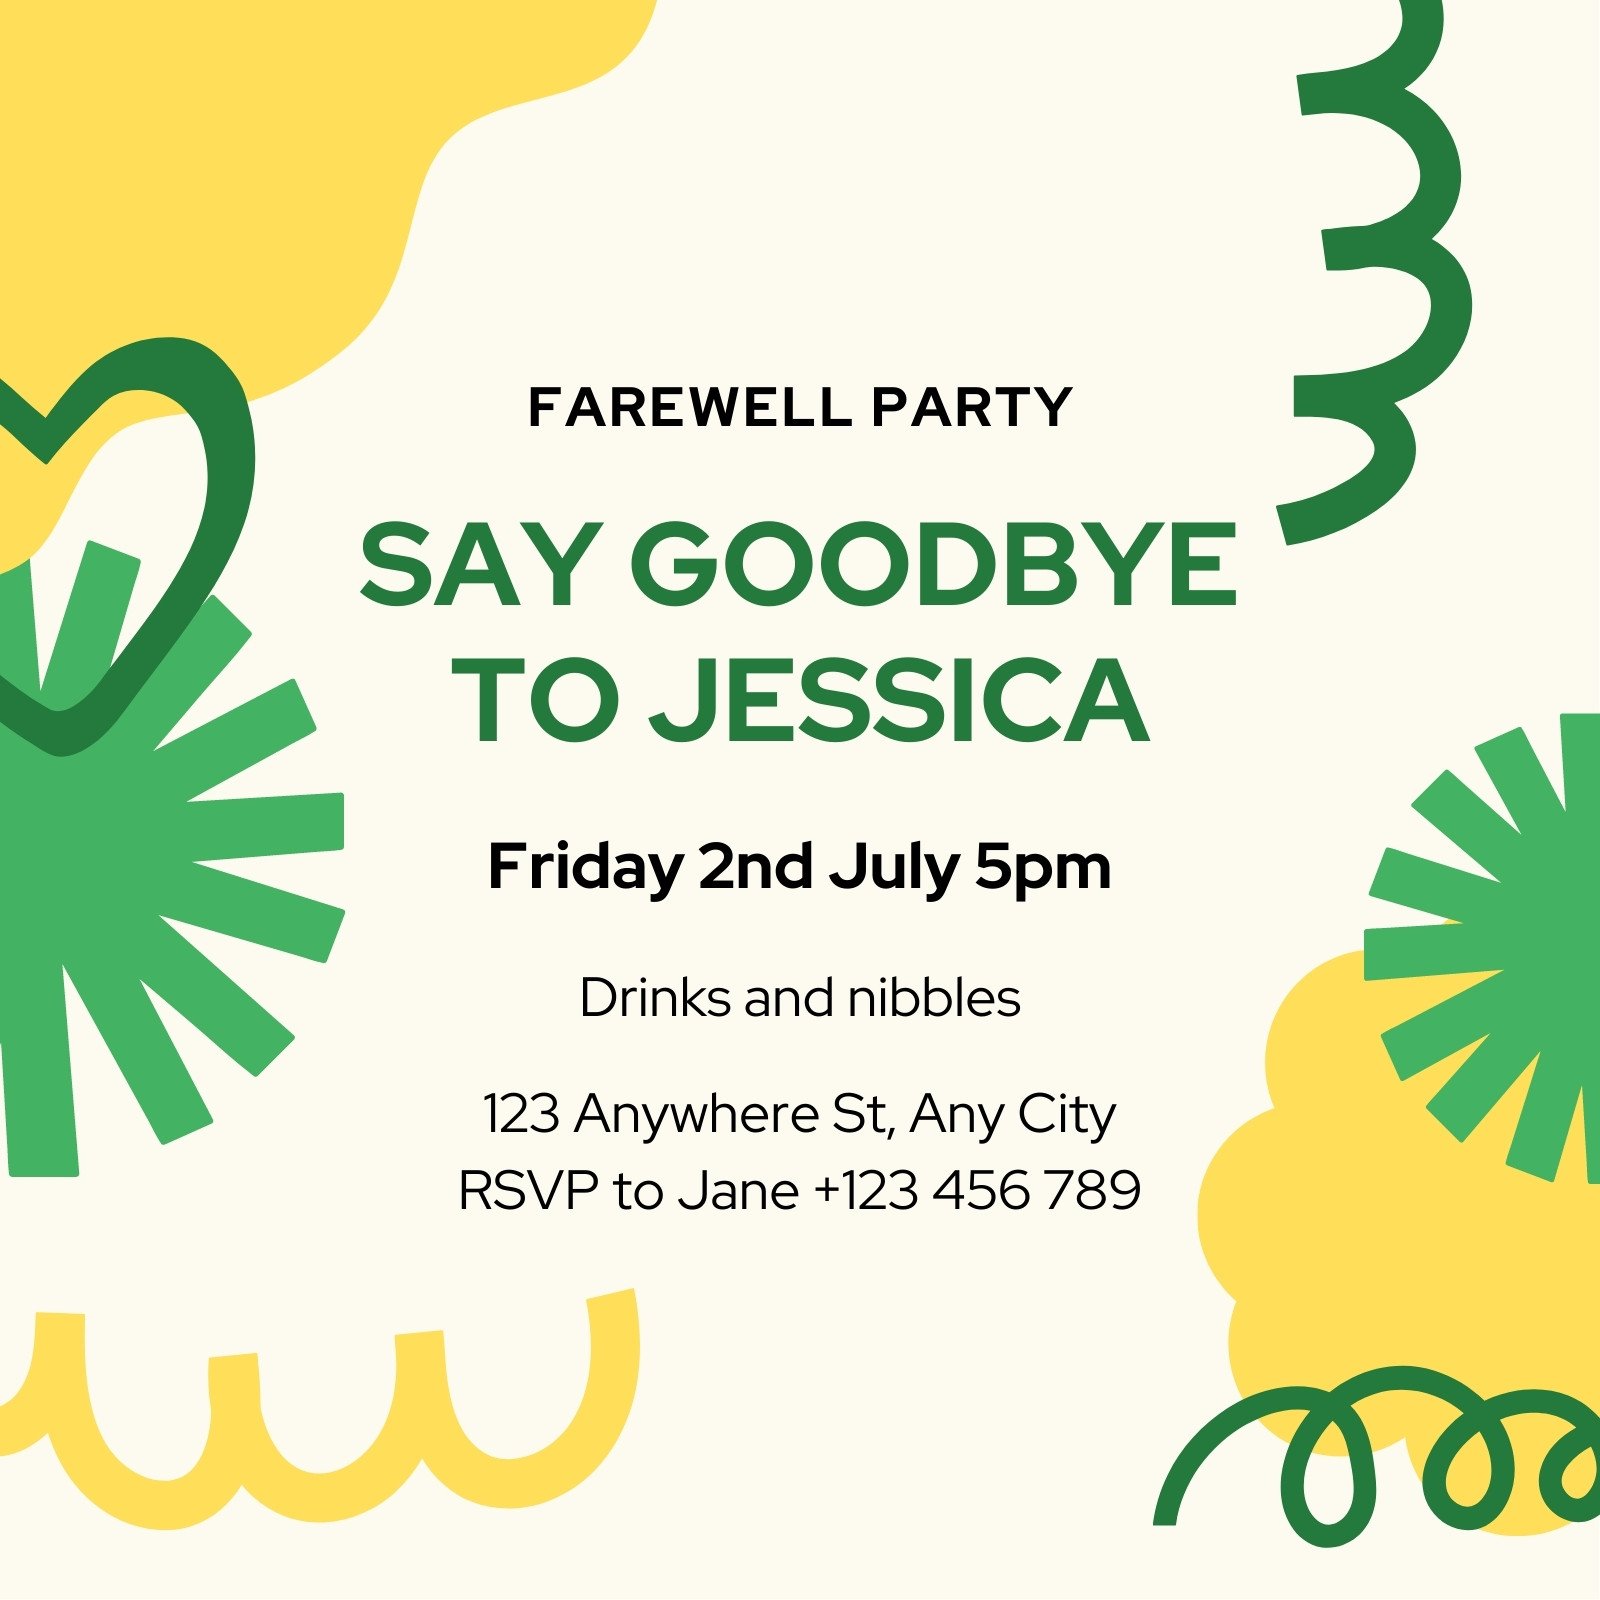 Military Farewell Party Invitation